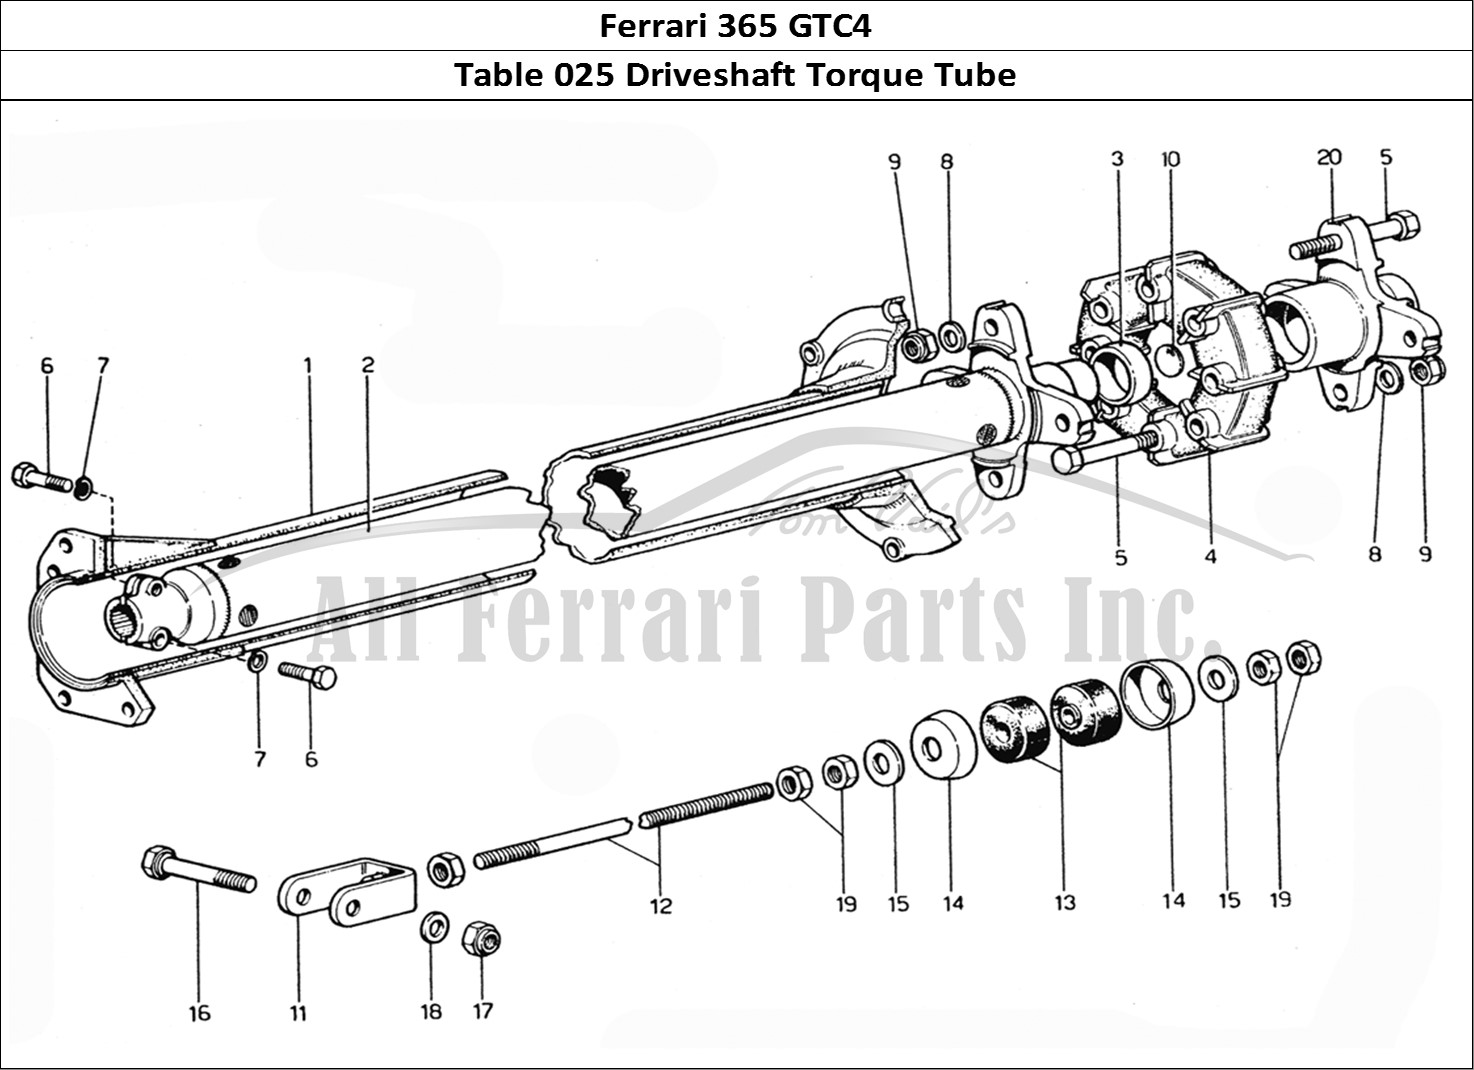 Ferrari Parts Ferrari 365 GTC4 (Mechanical) Page 025 Torque tube